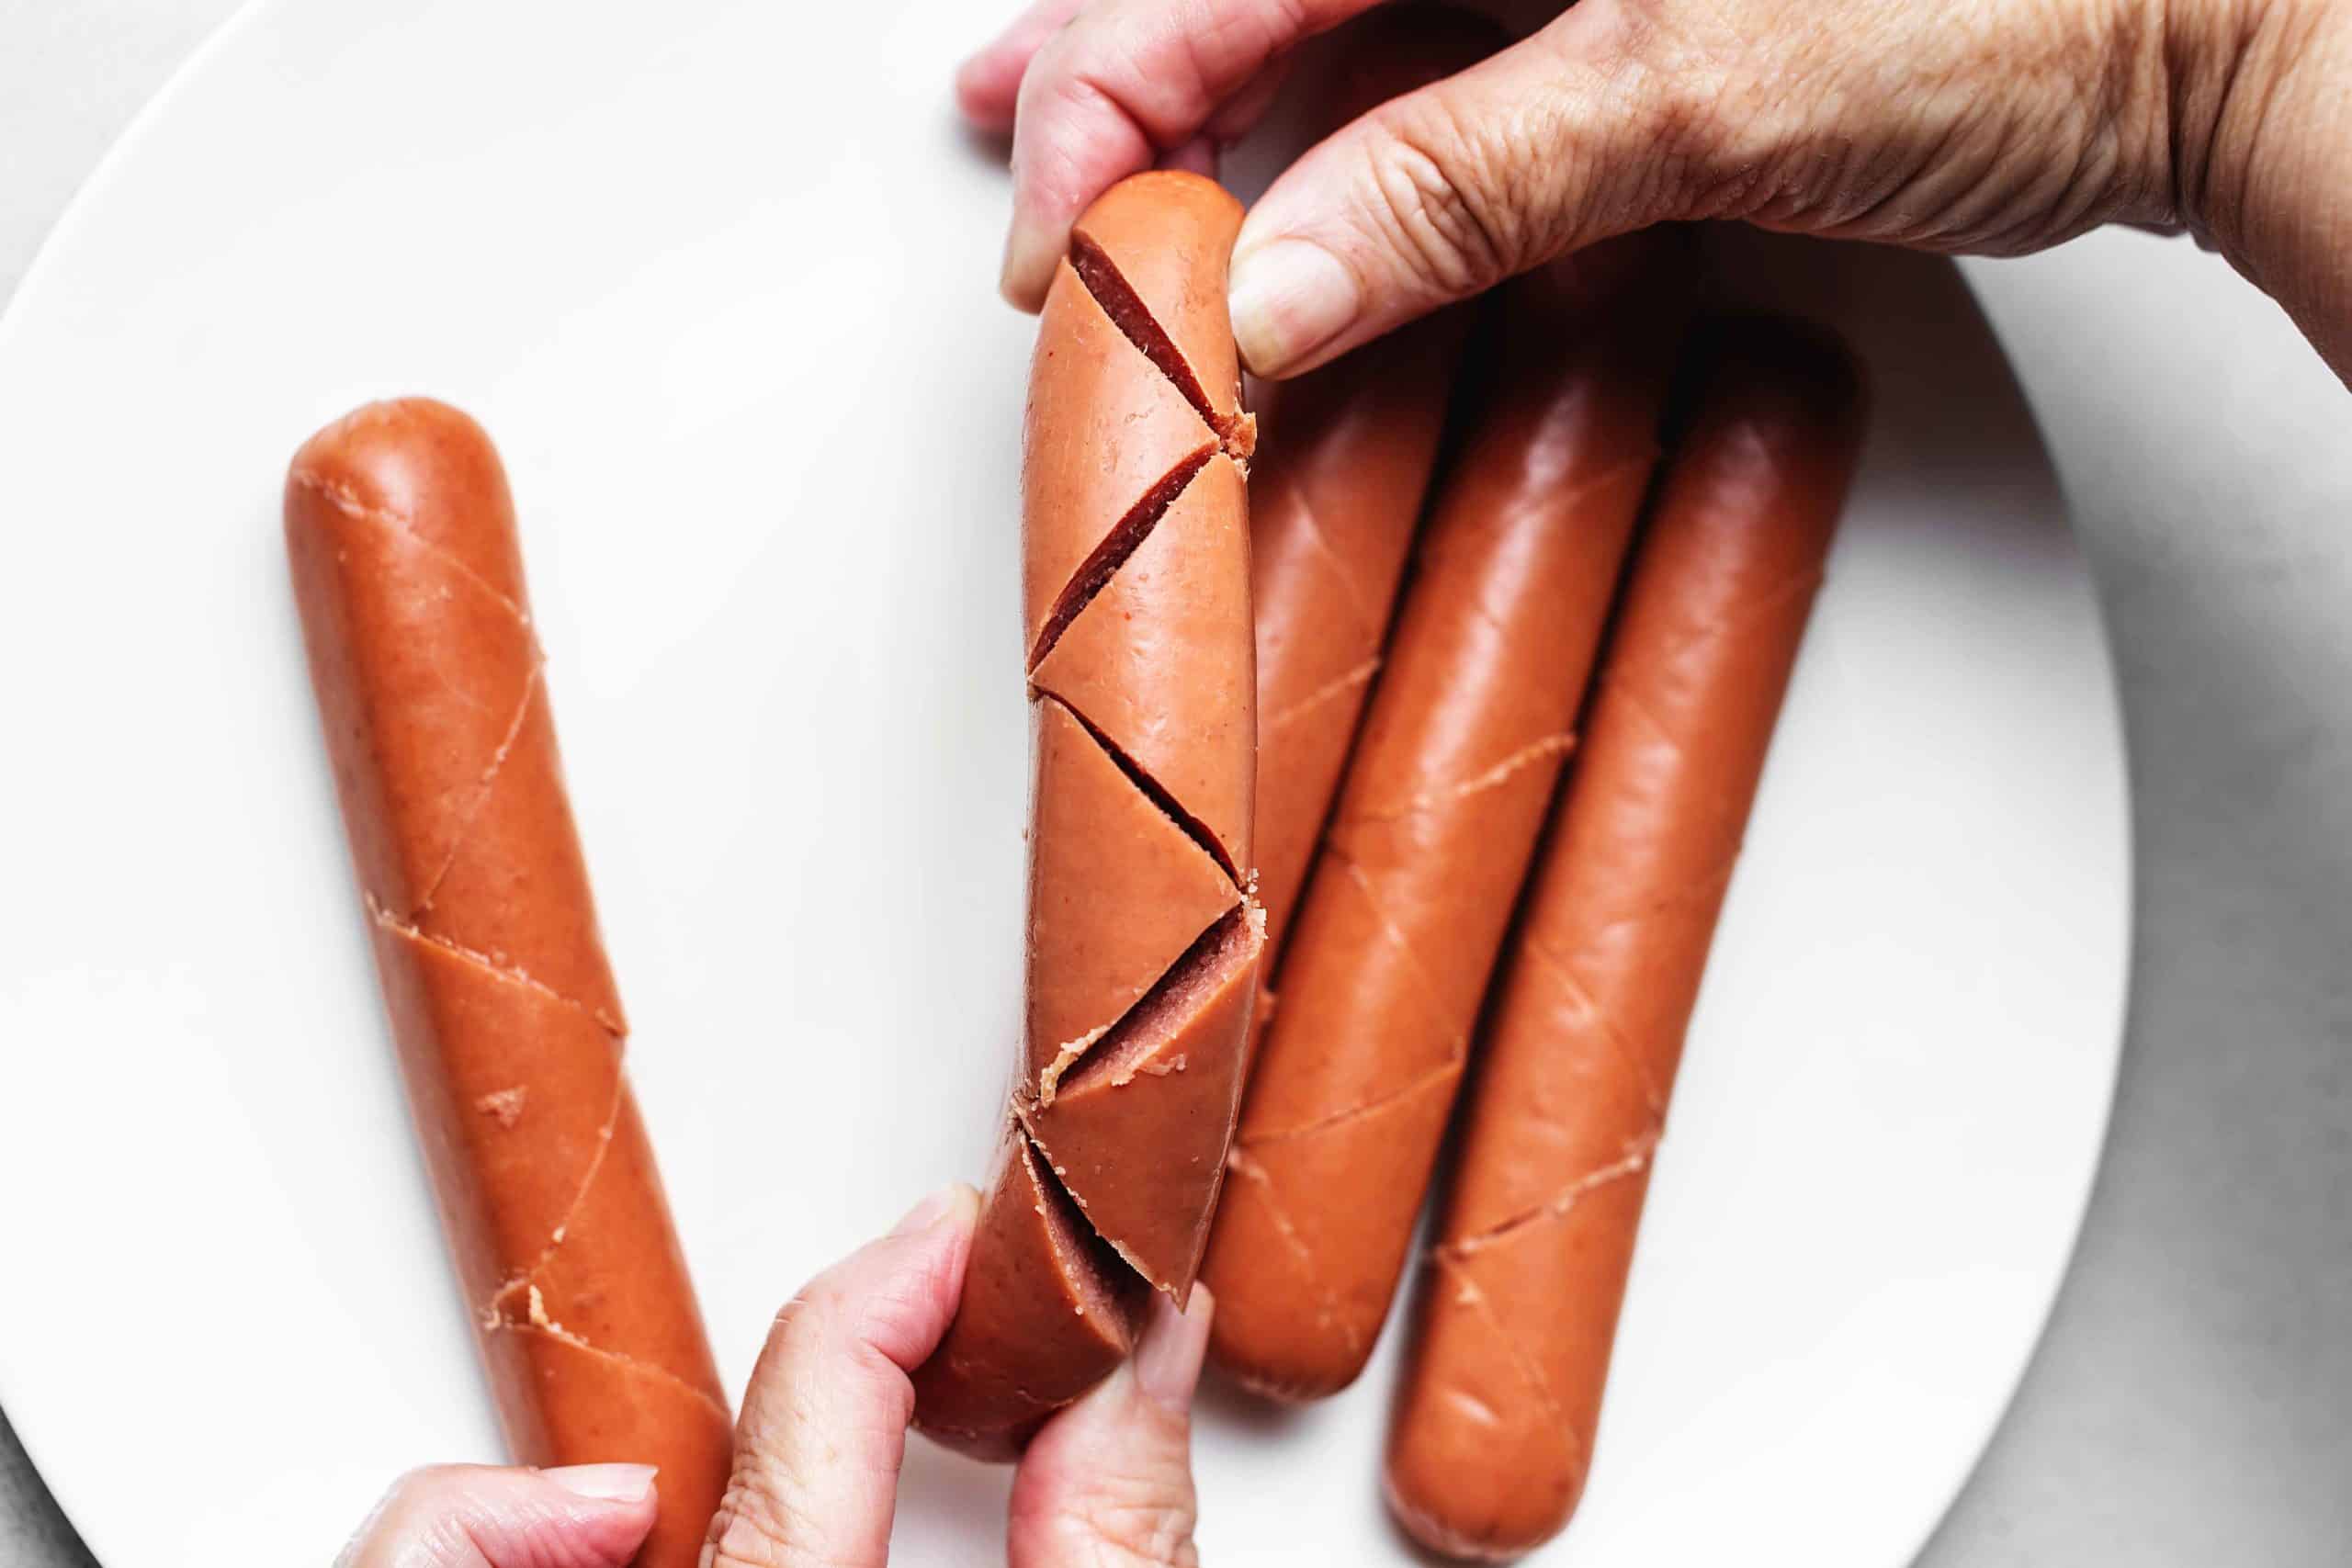 cutting hot dogs